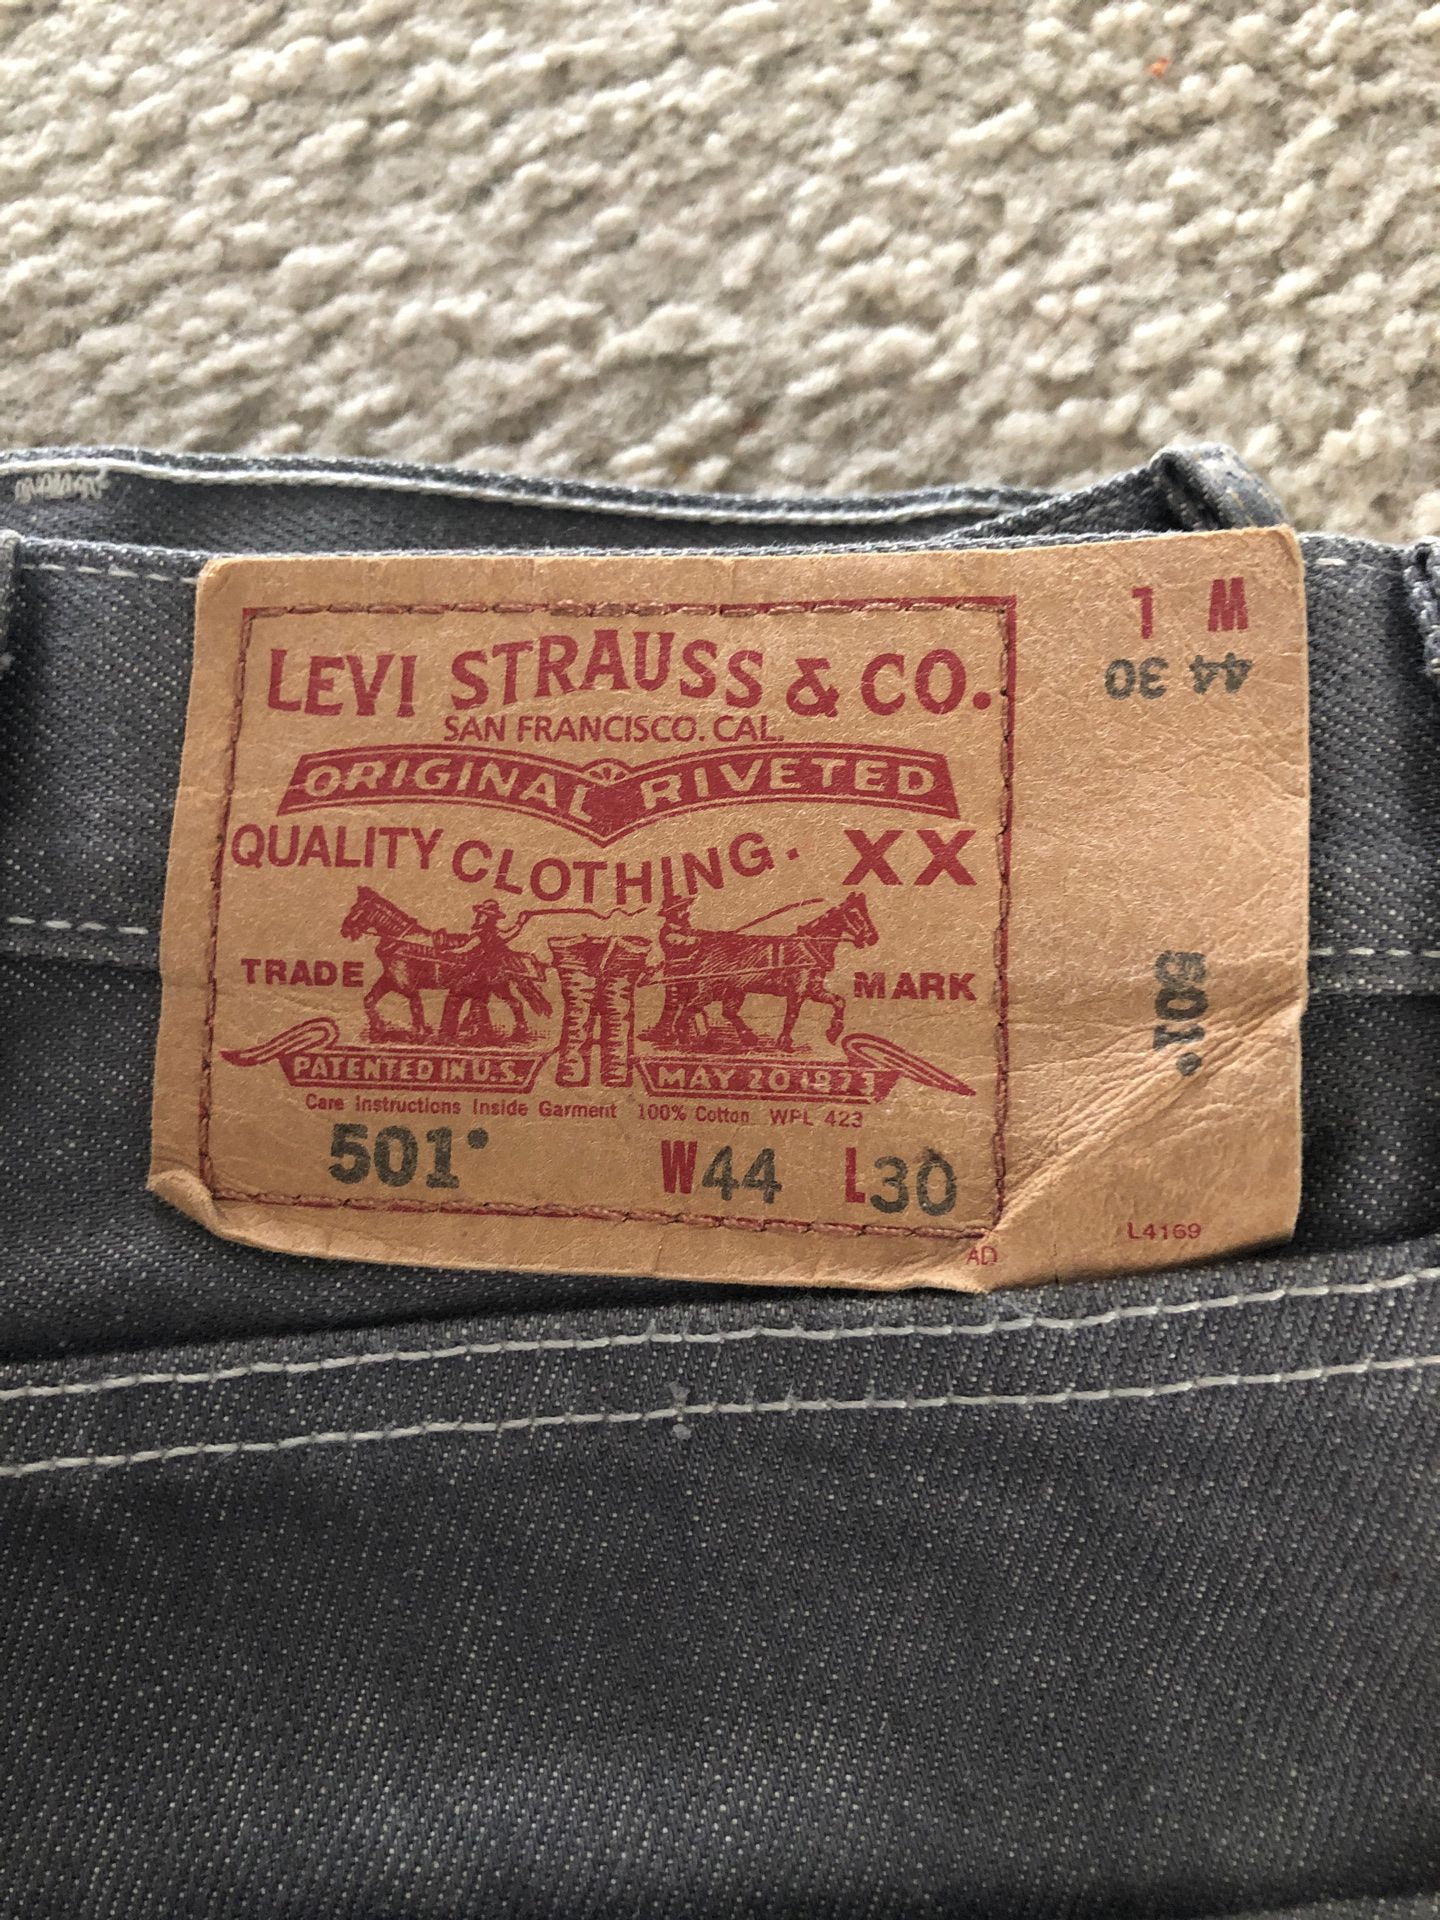 501 Levi Strauss light grey color jeans